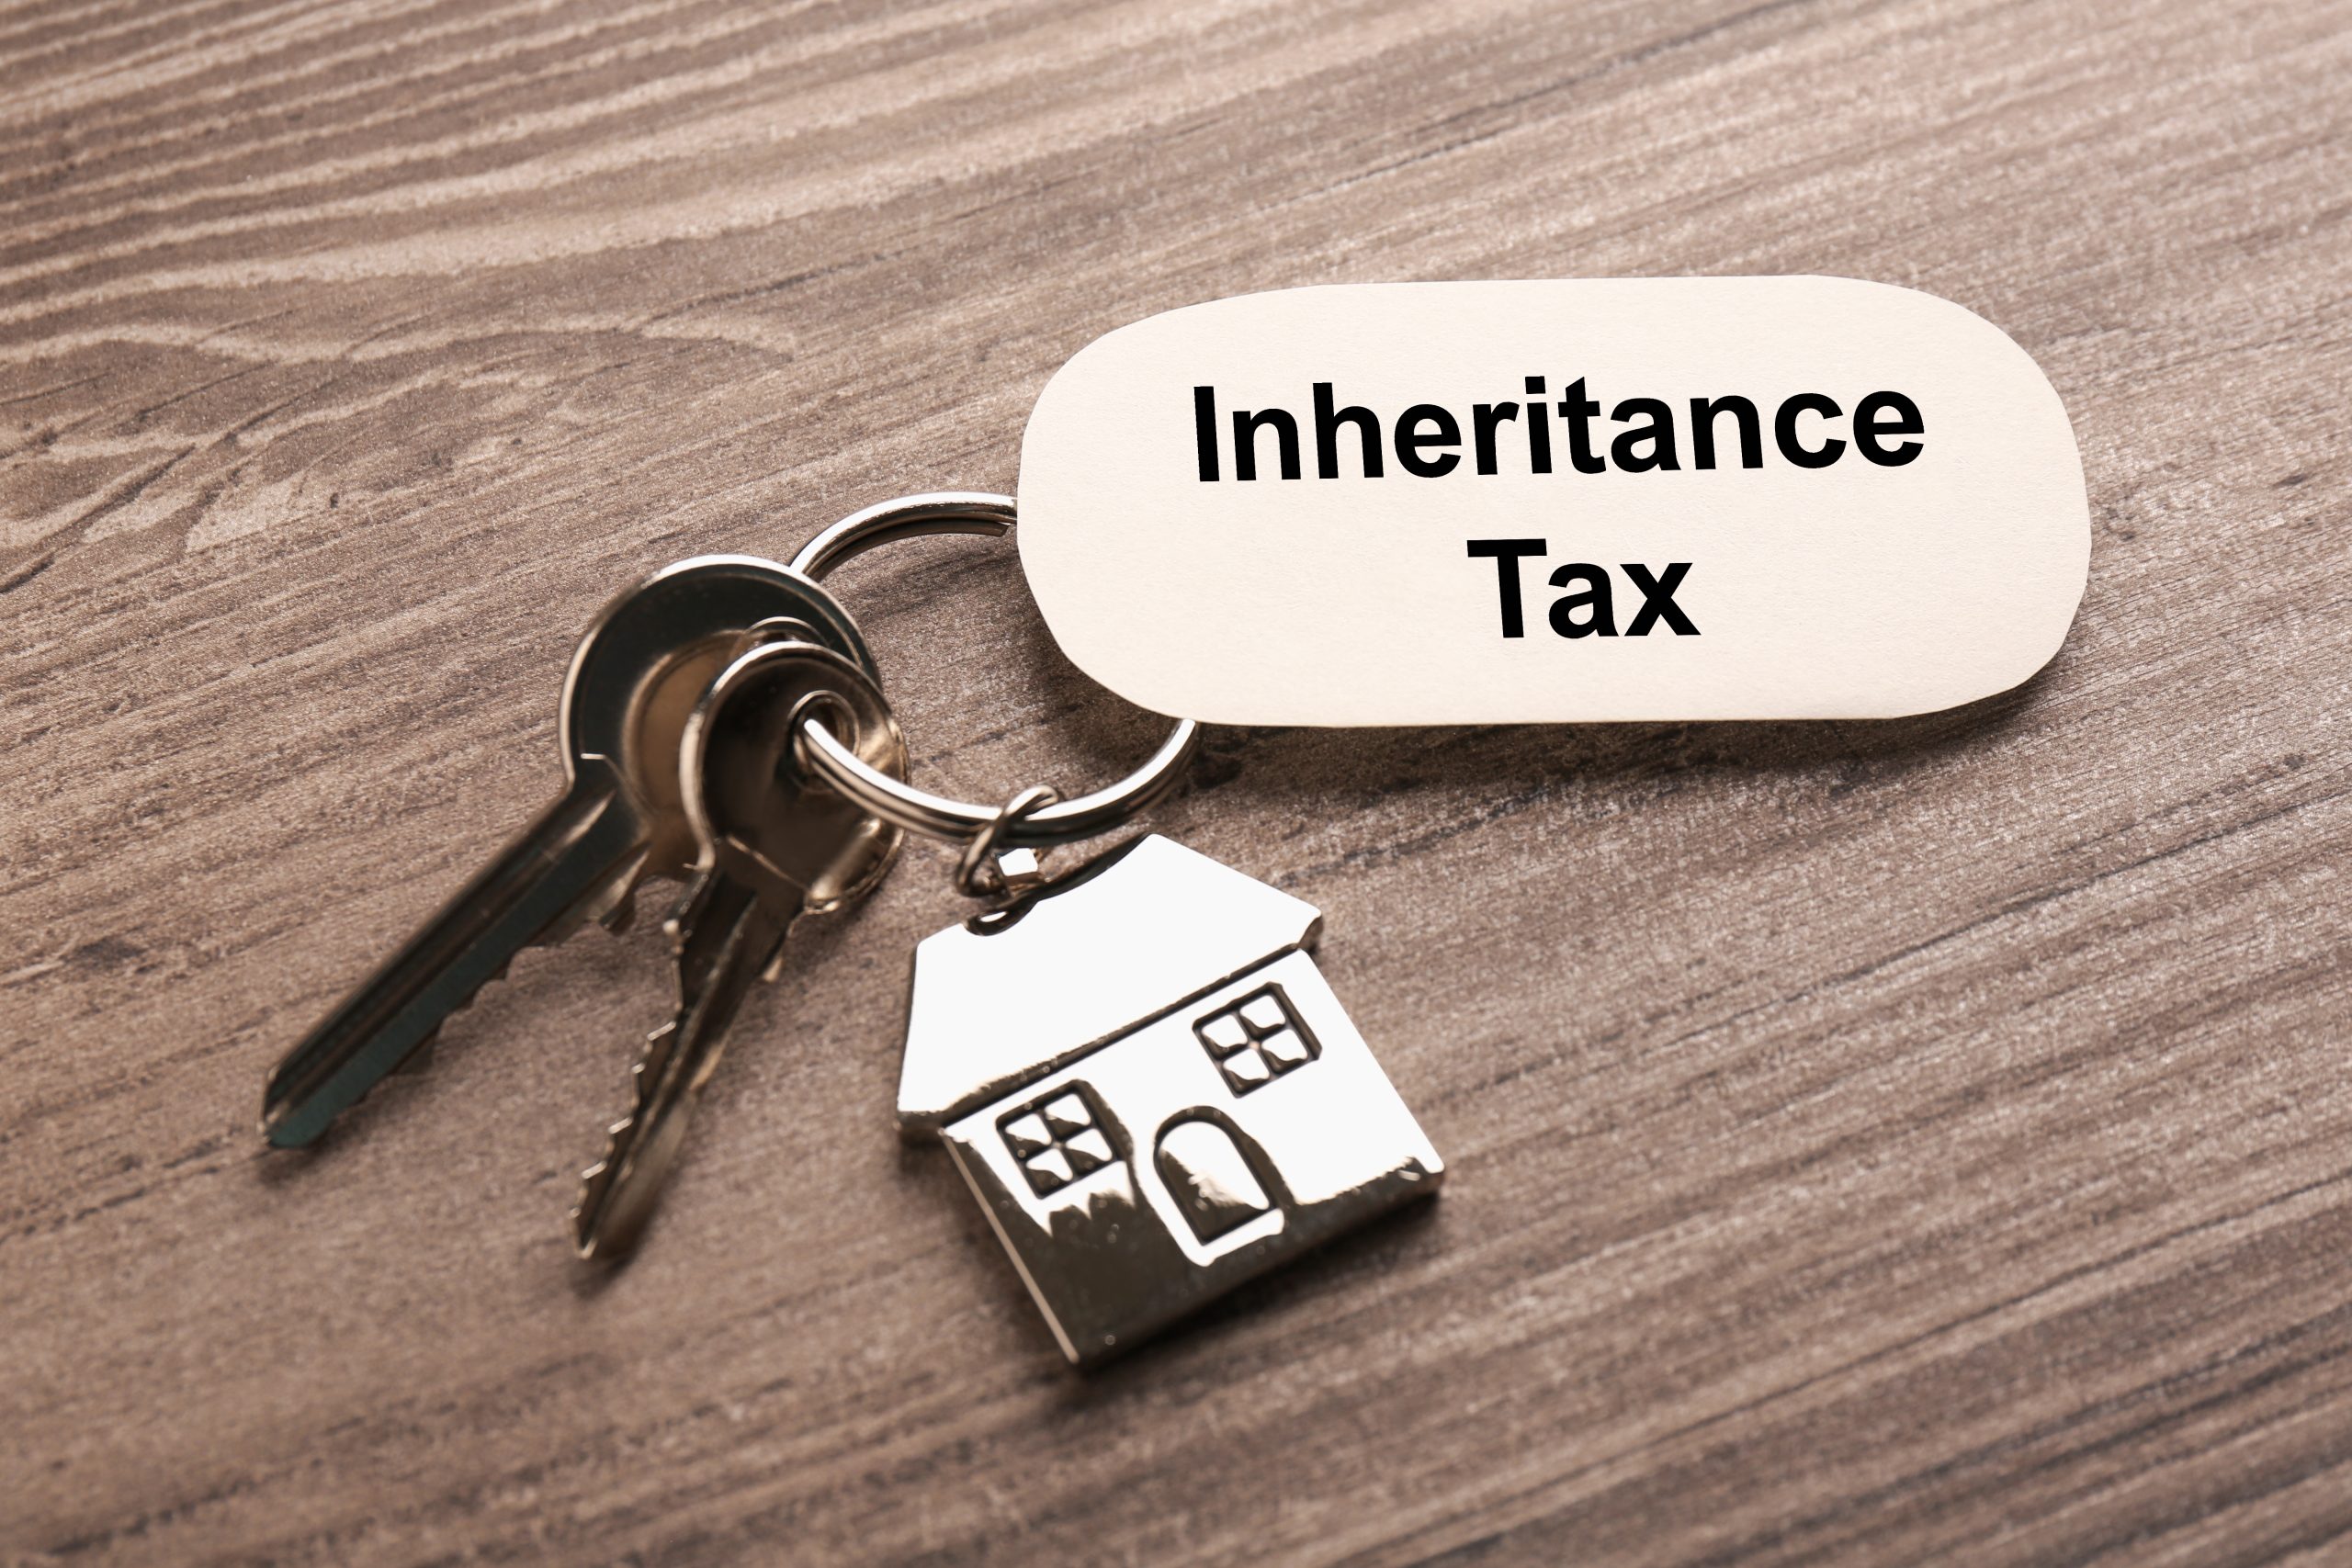 Inheritance Tax Keys and House